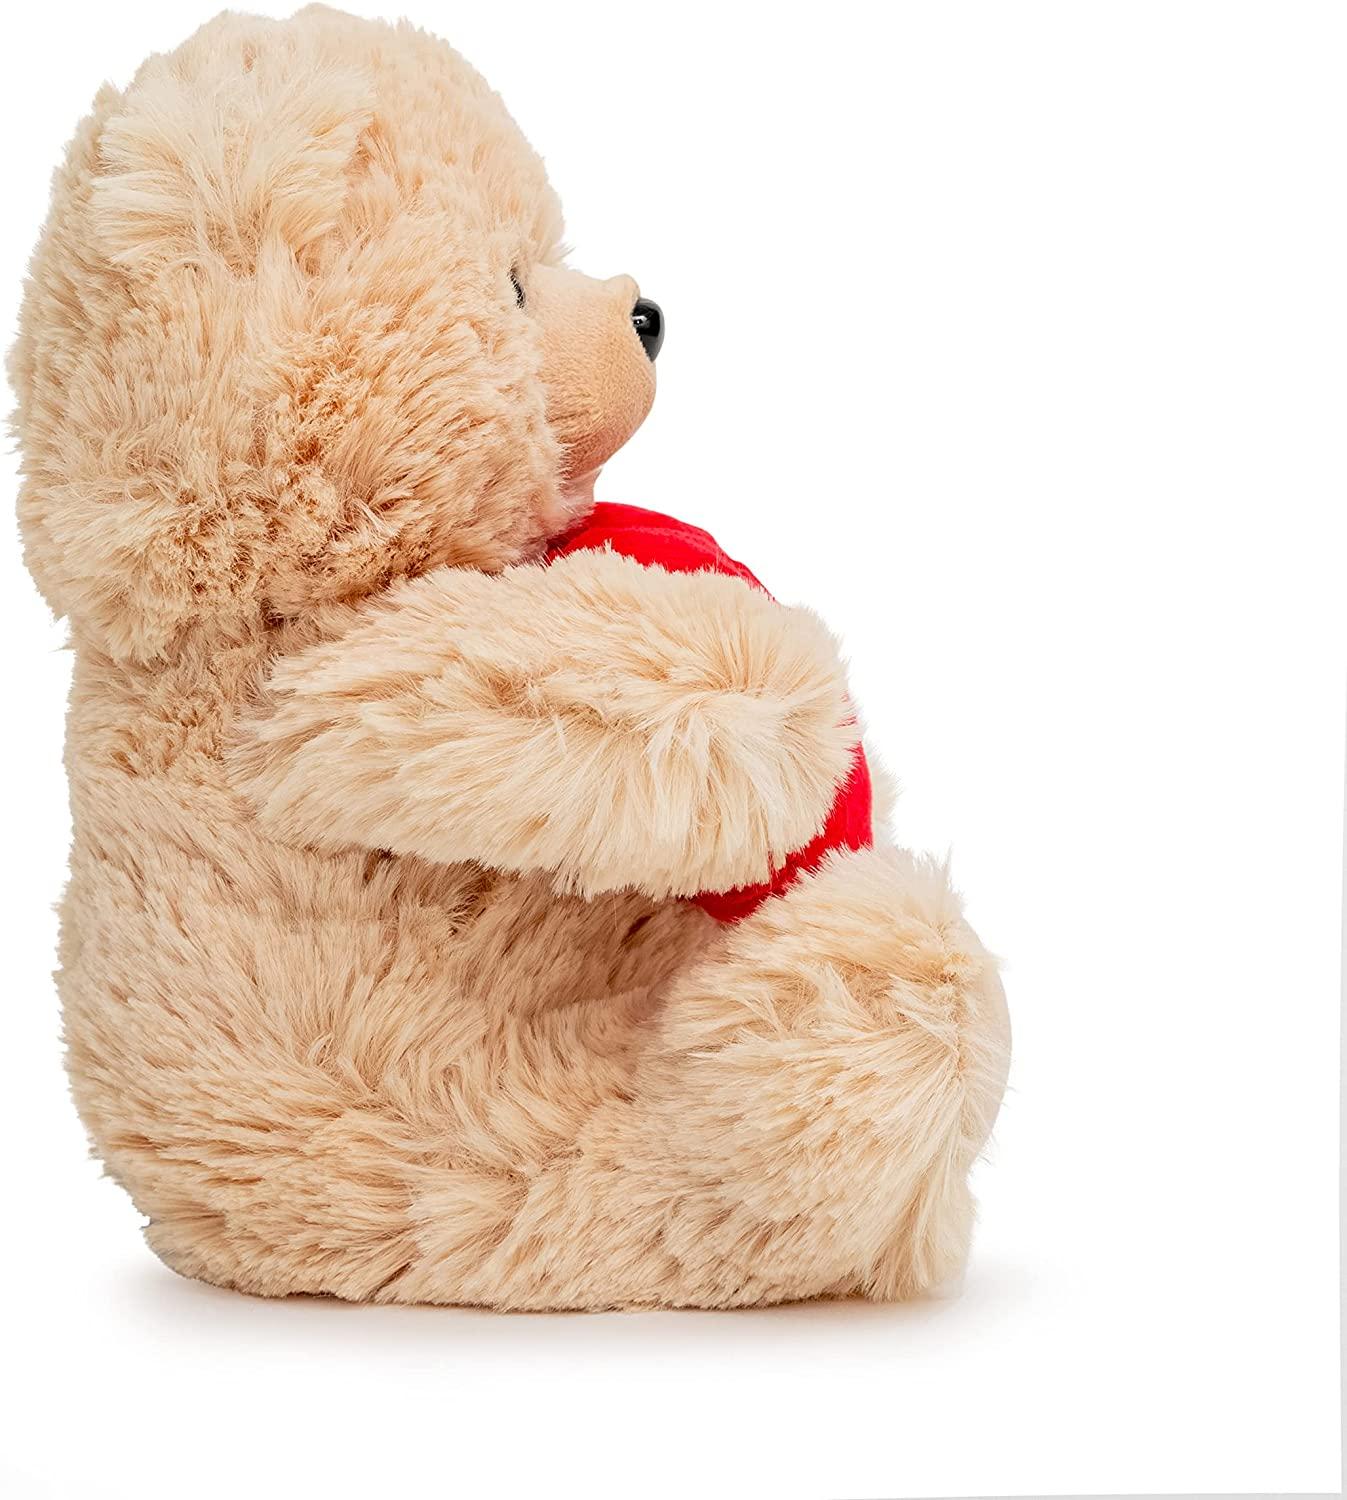 Teddy Bear for Her, Get Well Soon, Hospital Gift, Personalization Feel  Better, Teddy Bear Gift for Girls & boy